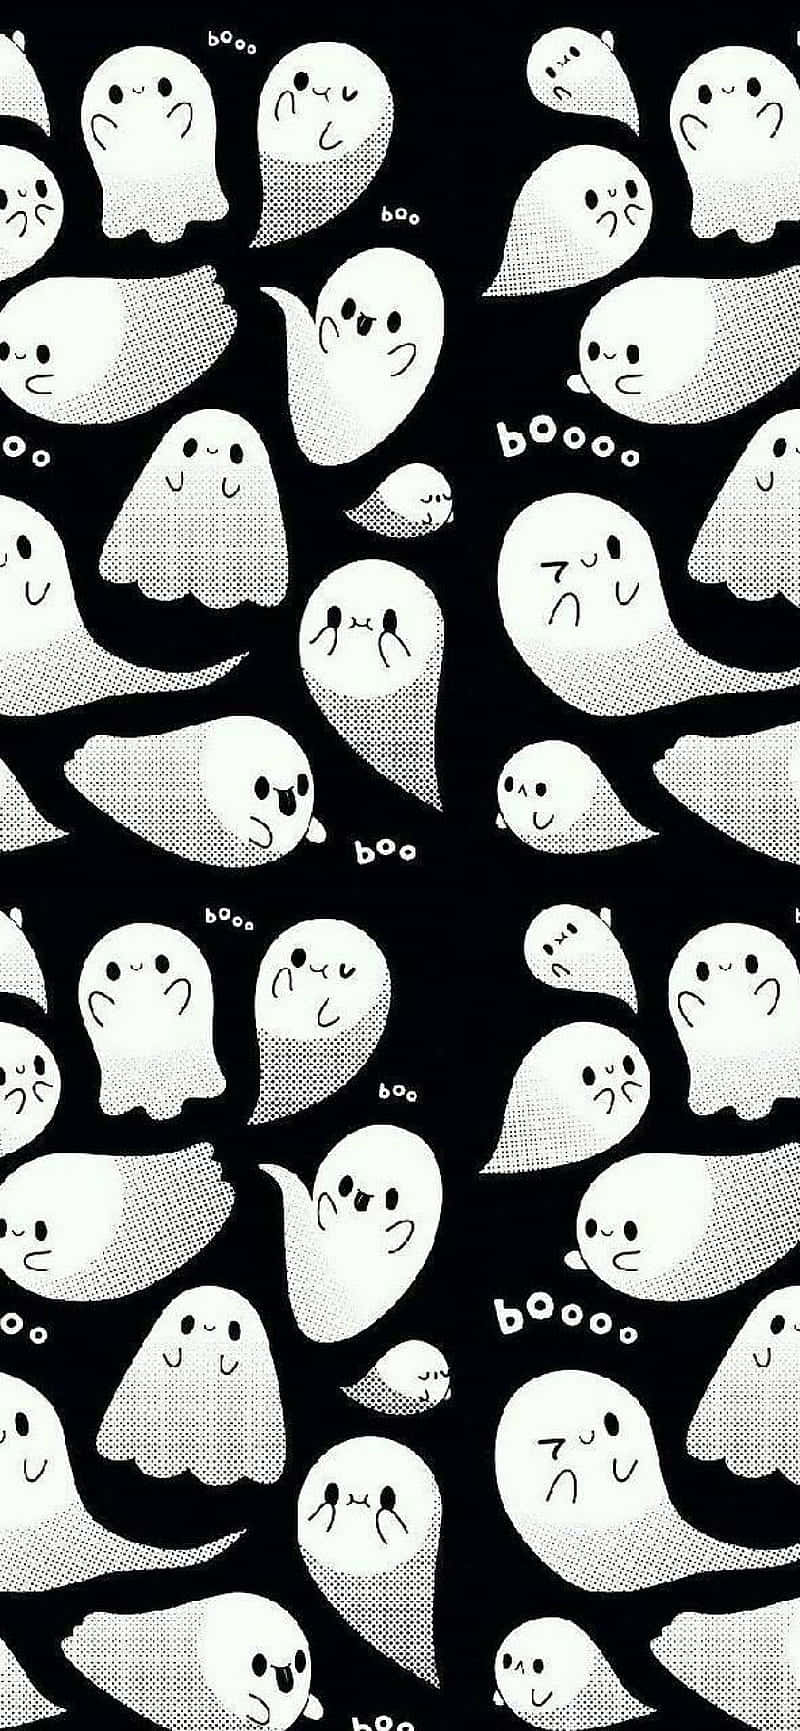 Cute Boo And Stuff Wallpaper